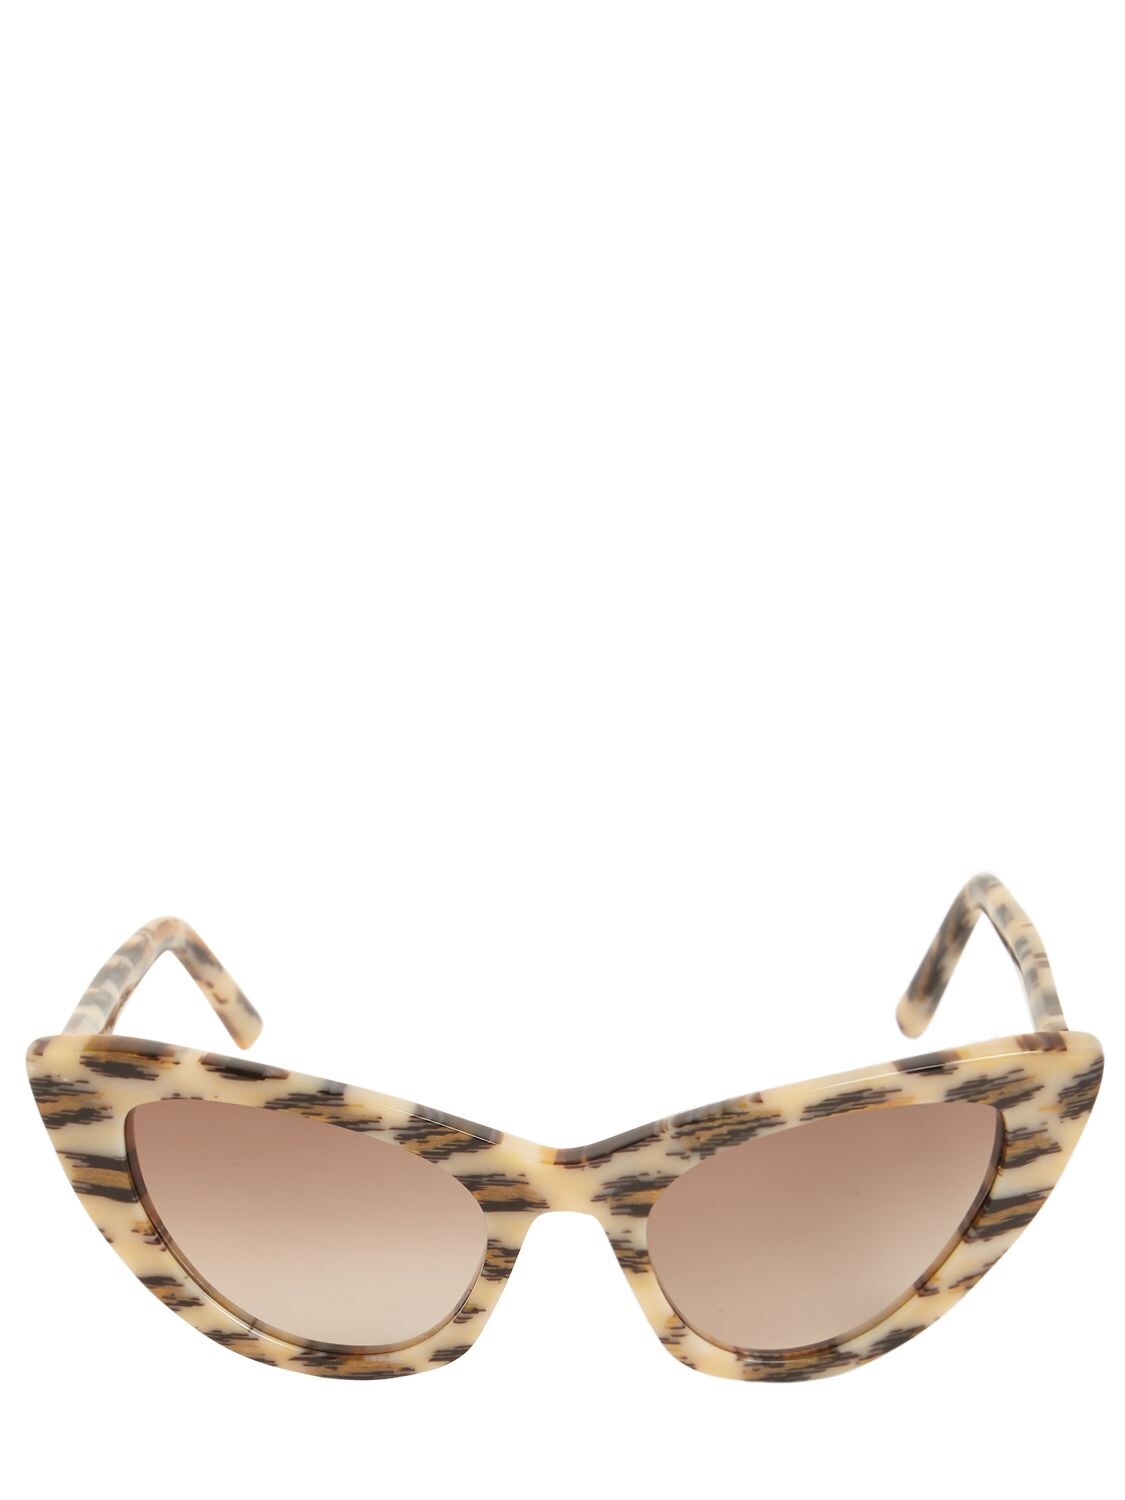 Saint Laurent Lily Cat-eye Acetate Sunglasses in White